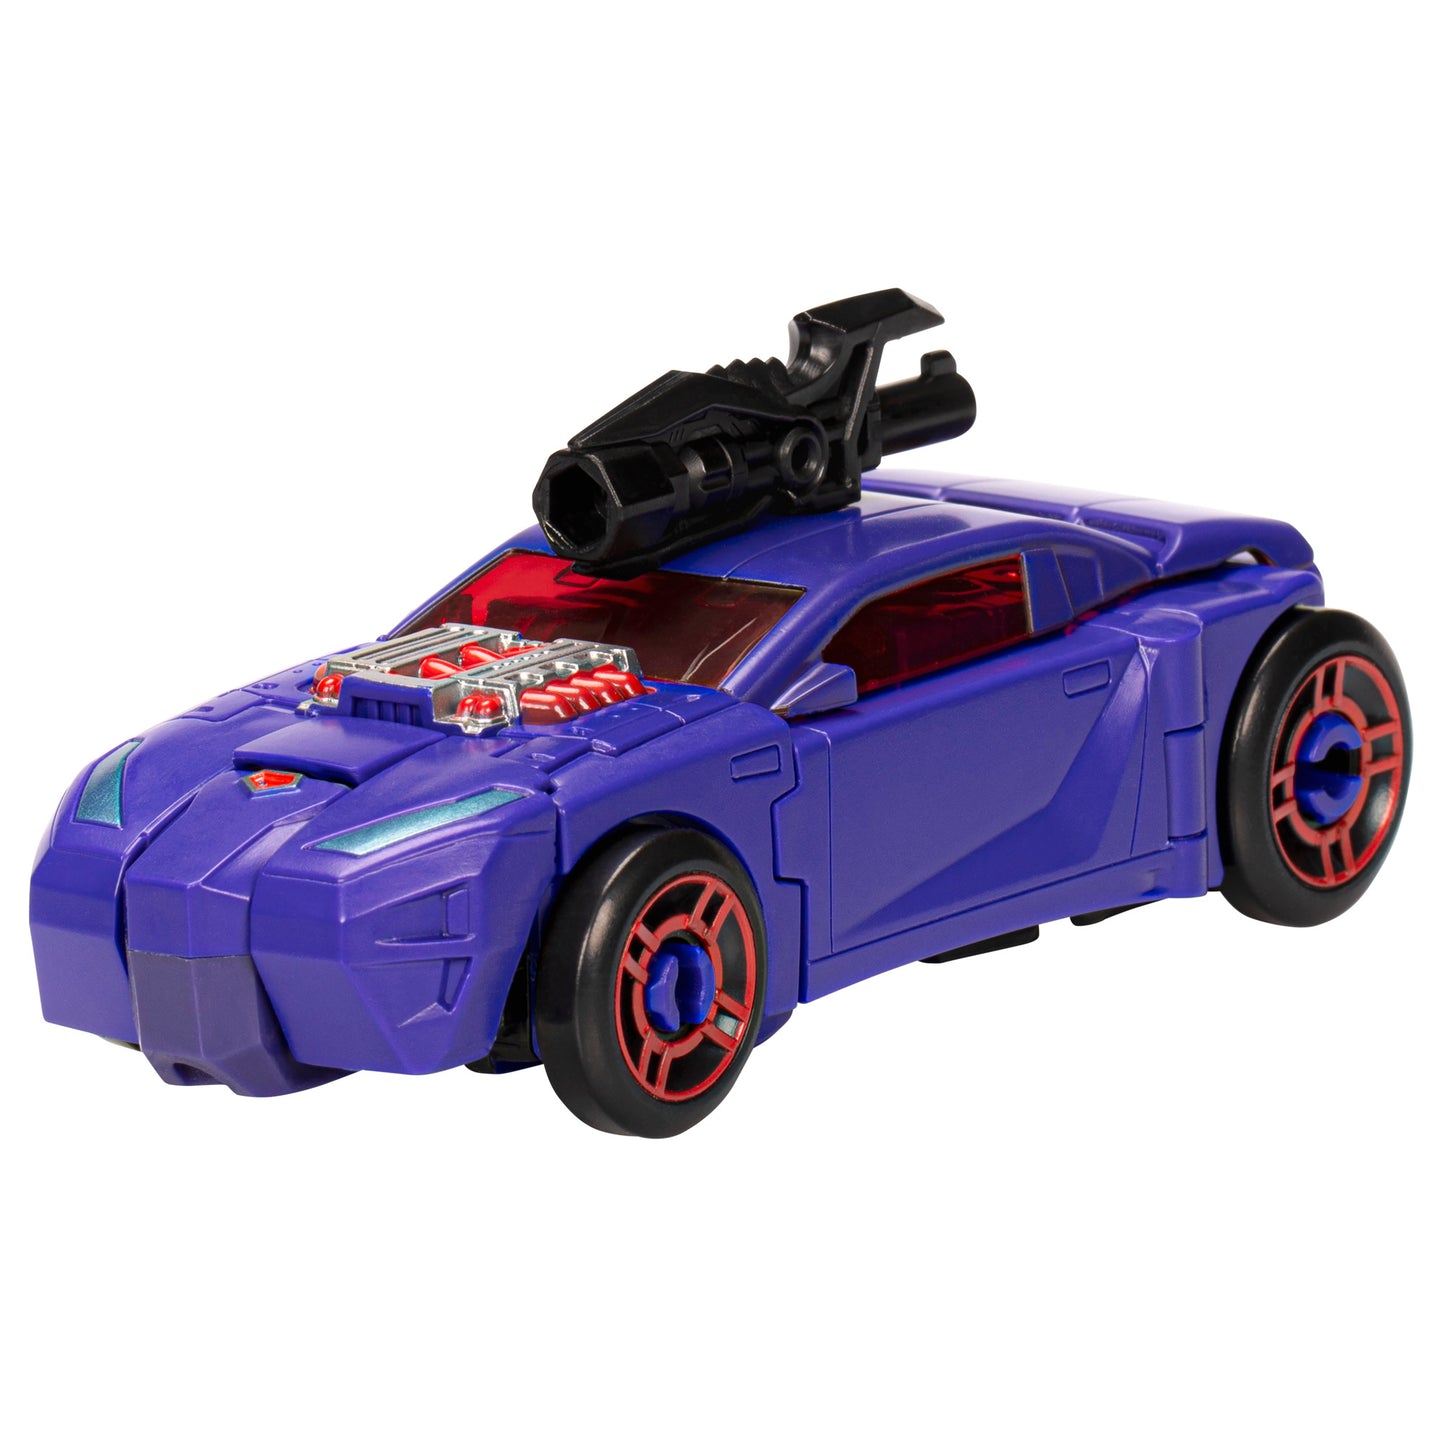 Transformers Legacy Evolution Deluxe Class Cyberverse Universe Shadow Striker car - Heretoserveyou